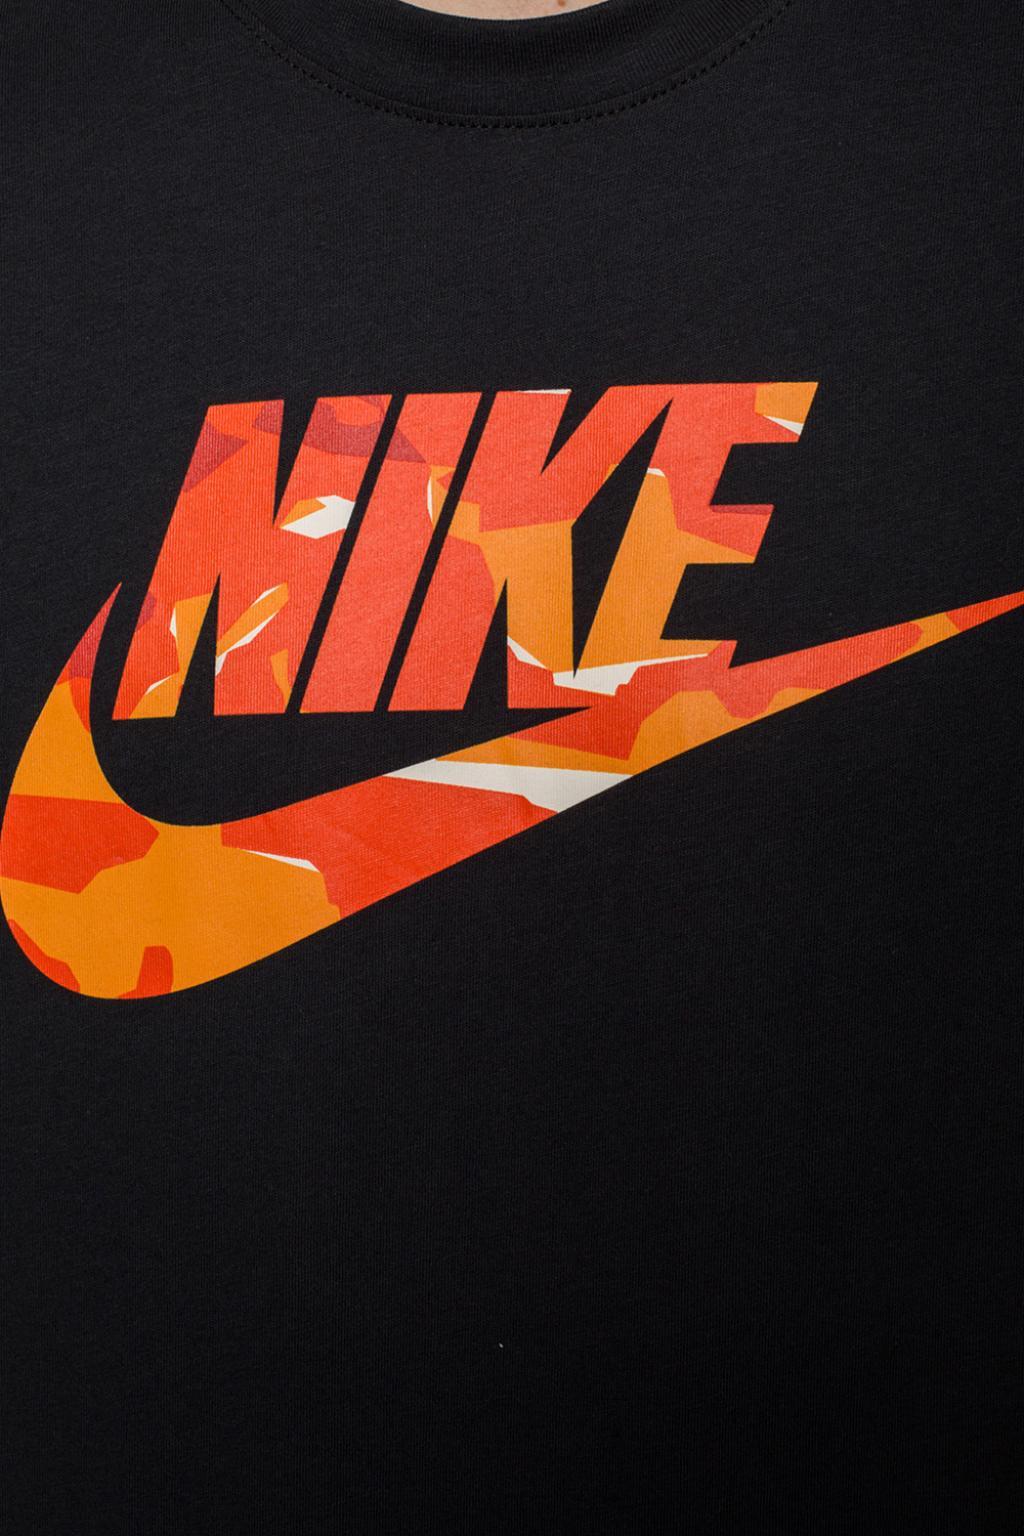 NIKE Mens sports XXL / Black NIKE - Camo Printed Logo Shirt